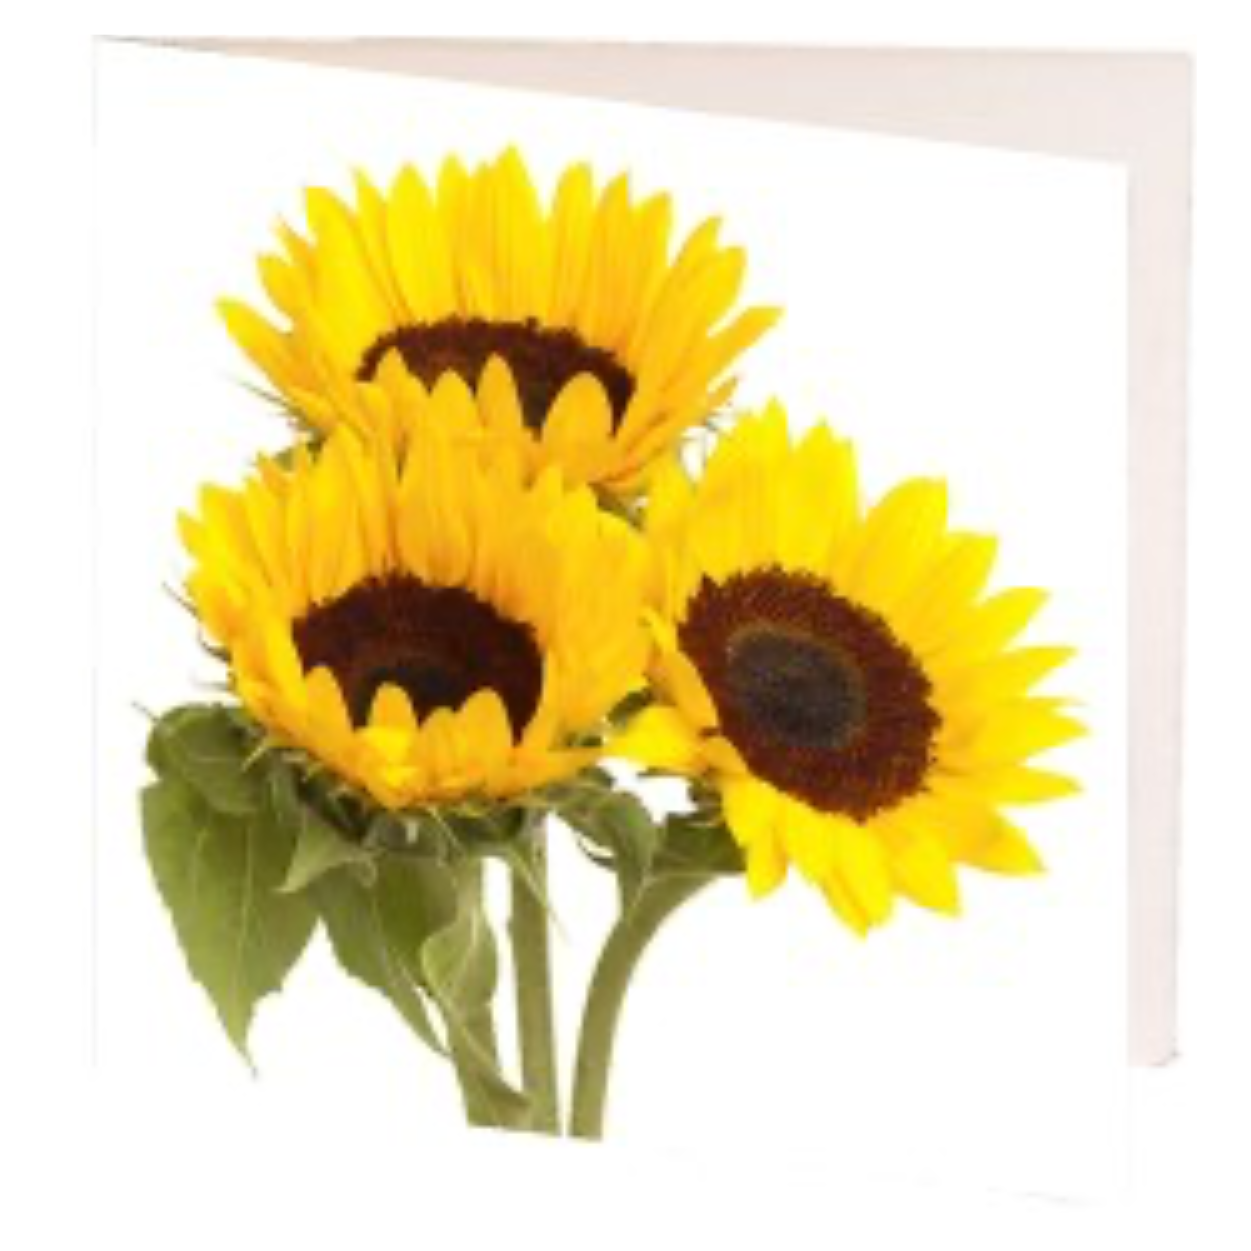 Sunflowers Gift Card